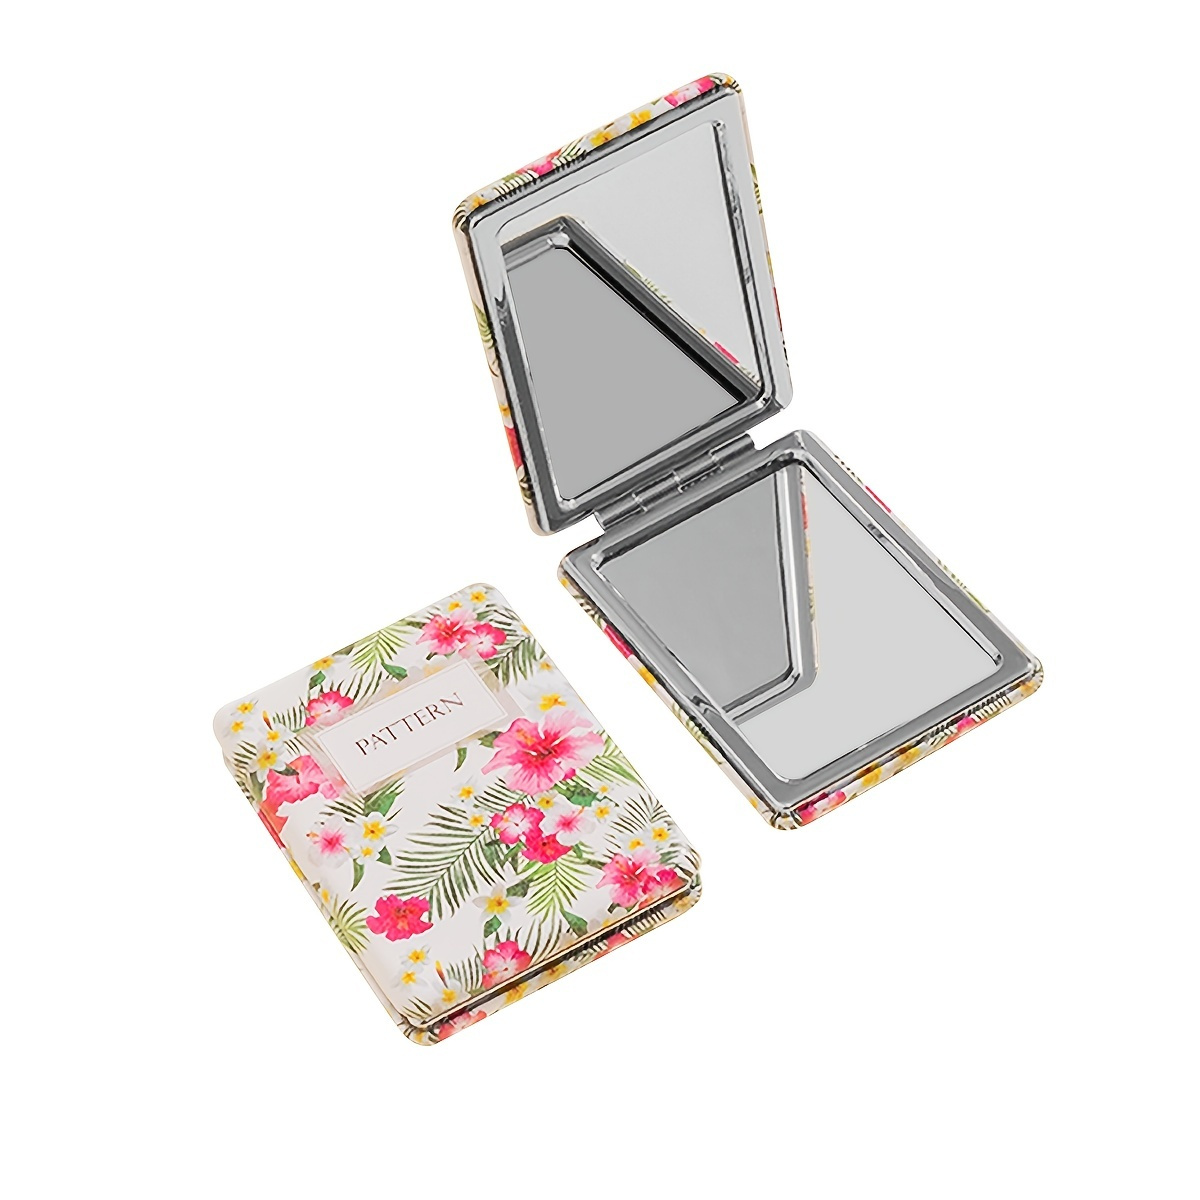 Digimall Designer Compact Pocket Mirror for Makeup Swan Design